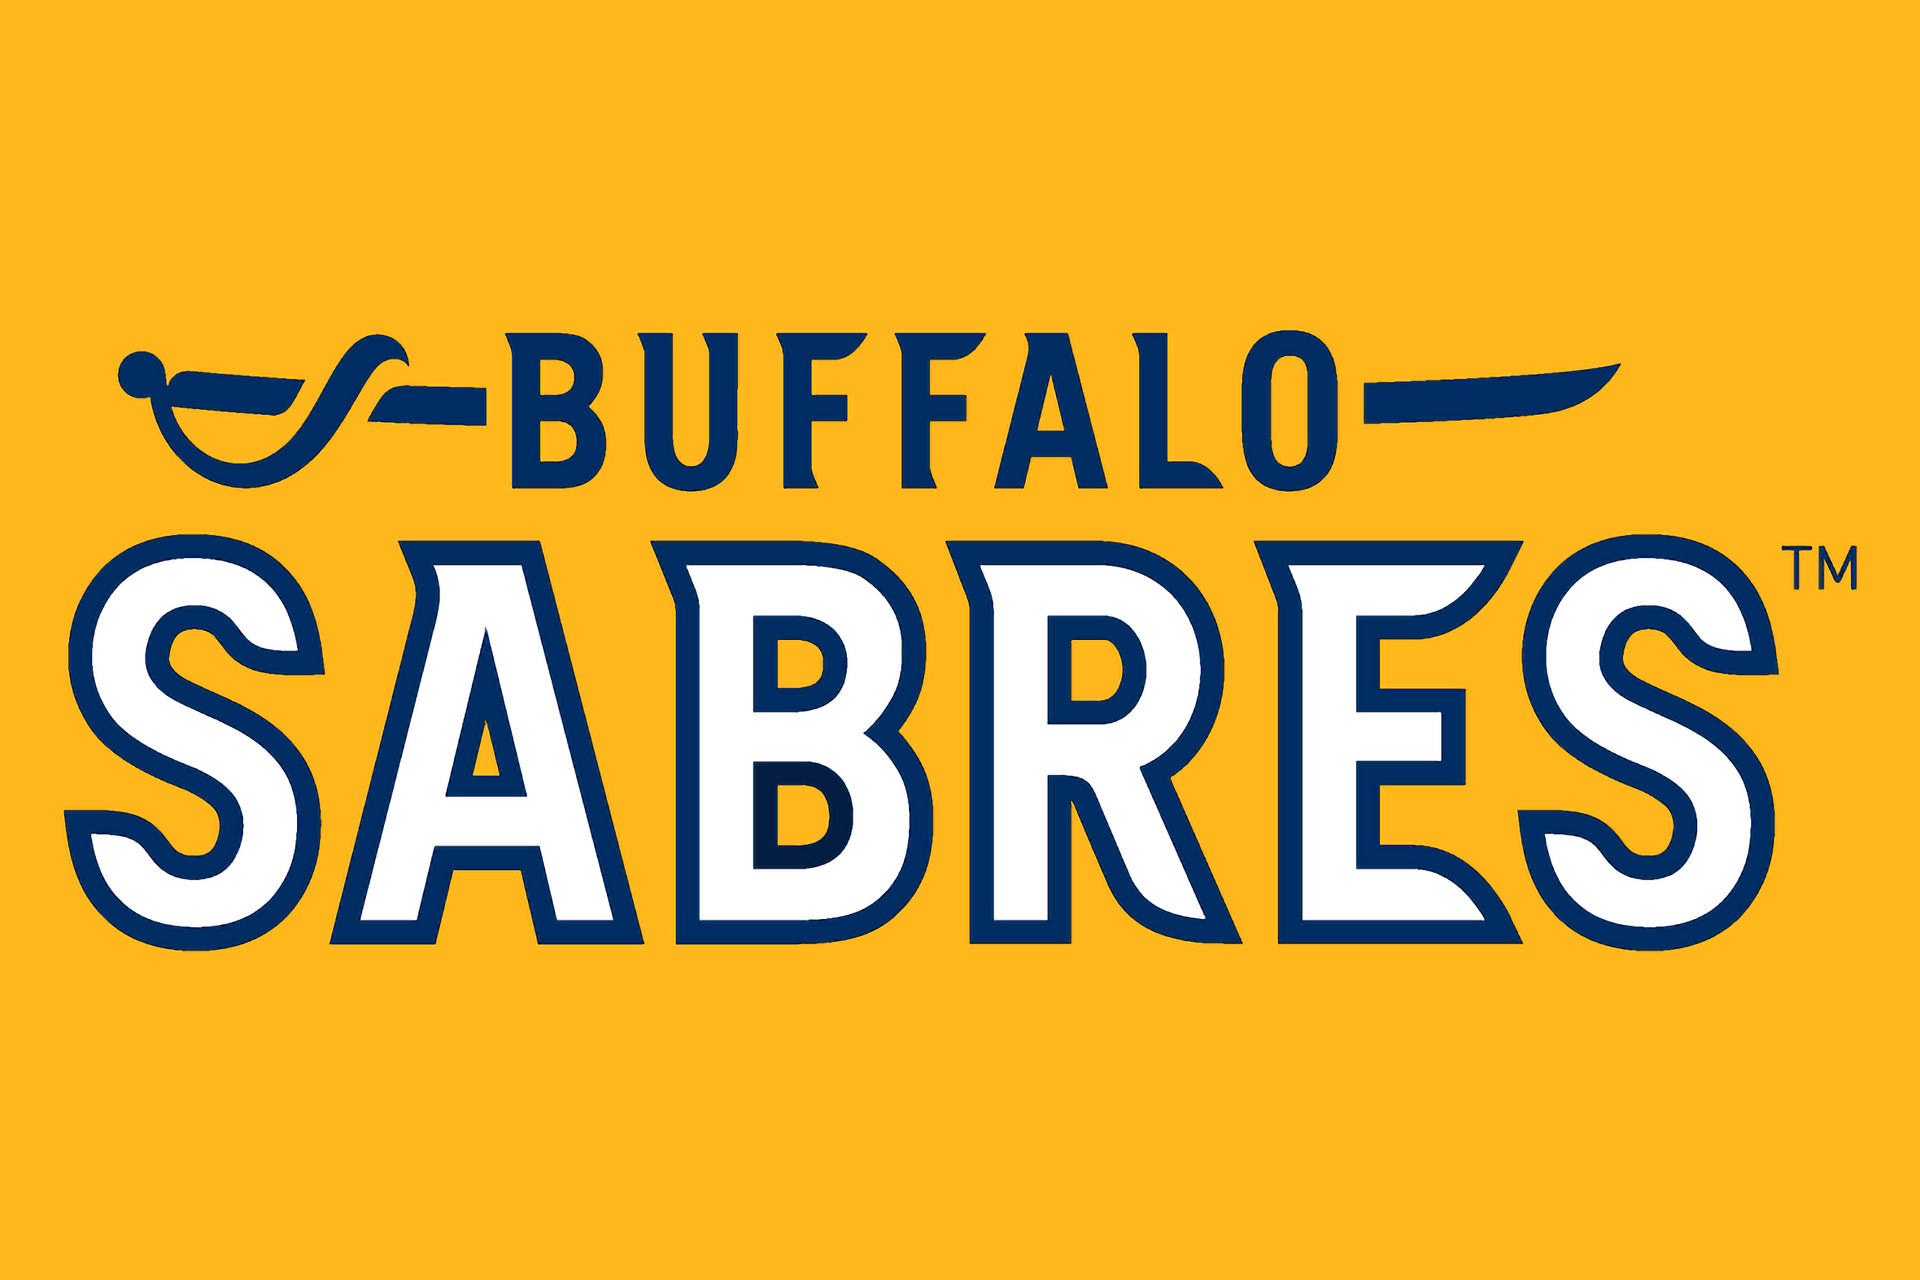 Buffalo Sabres Yellow Text Wallpaper